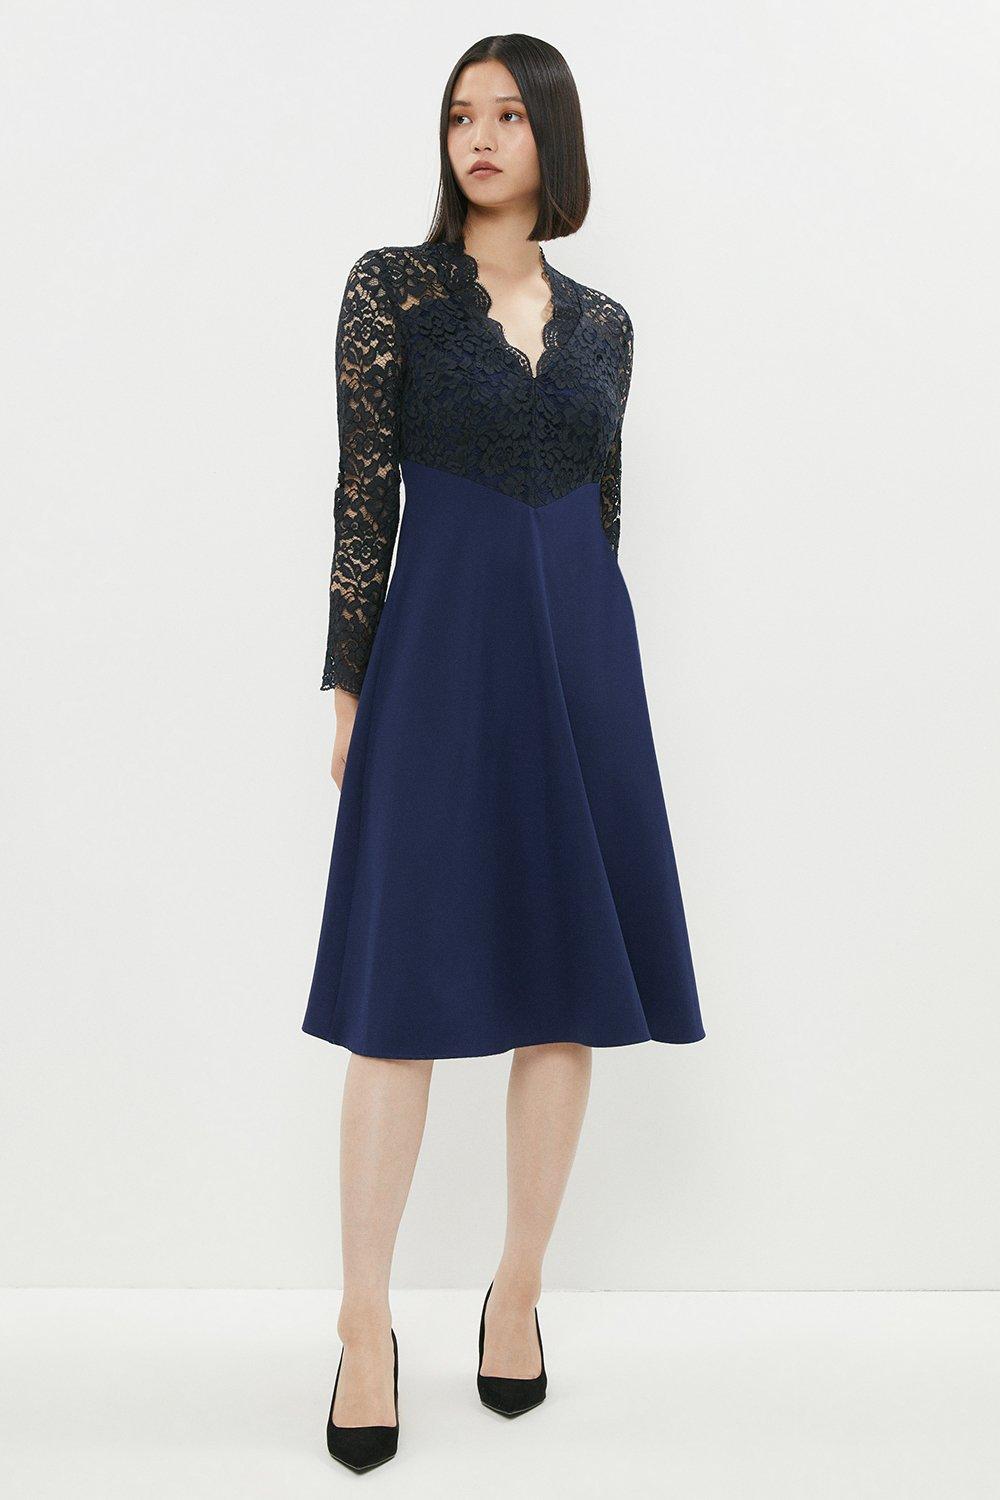 Premium Lace Top Full Skirt Midi Dress - Navy